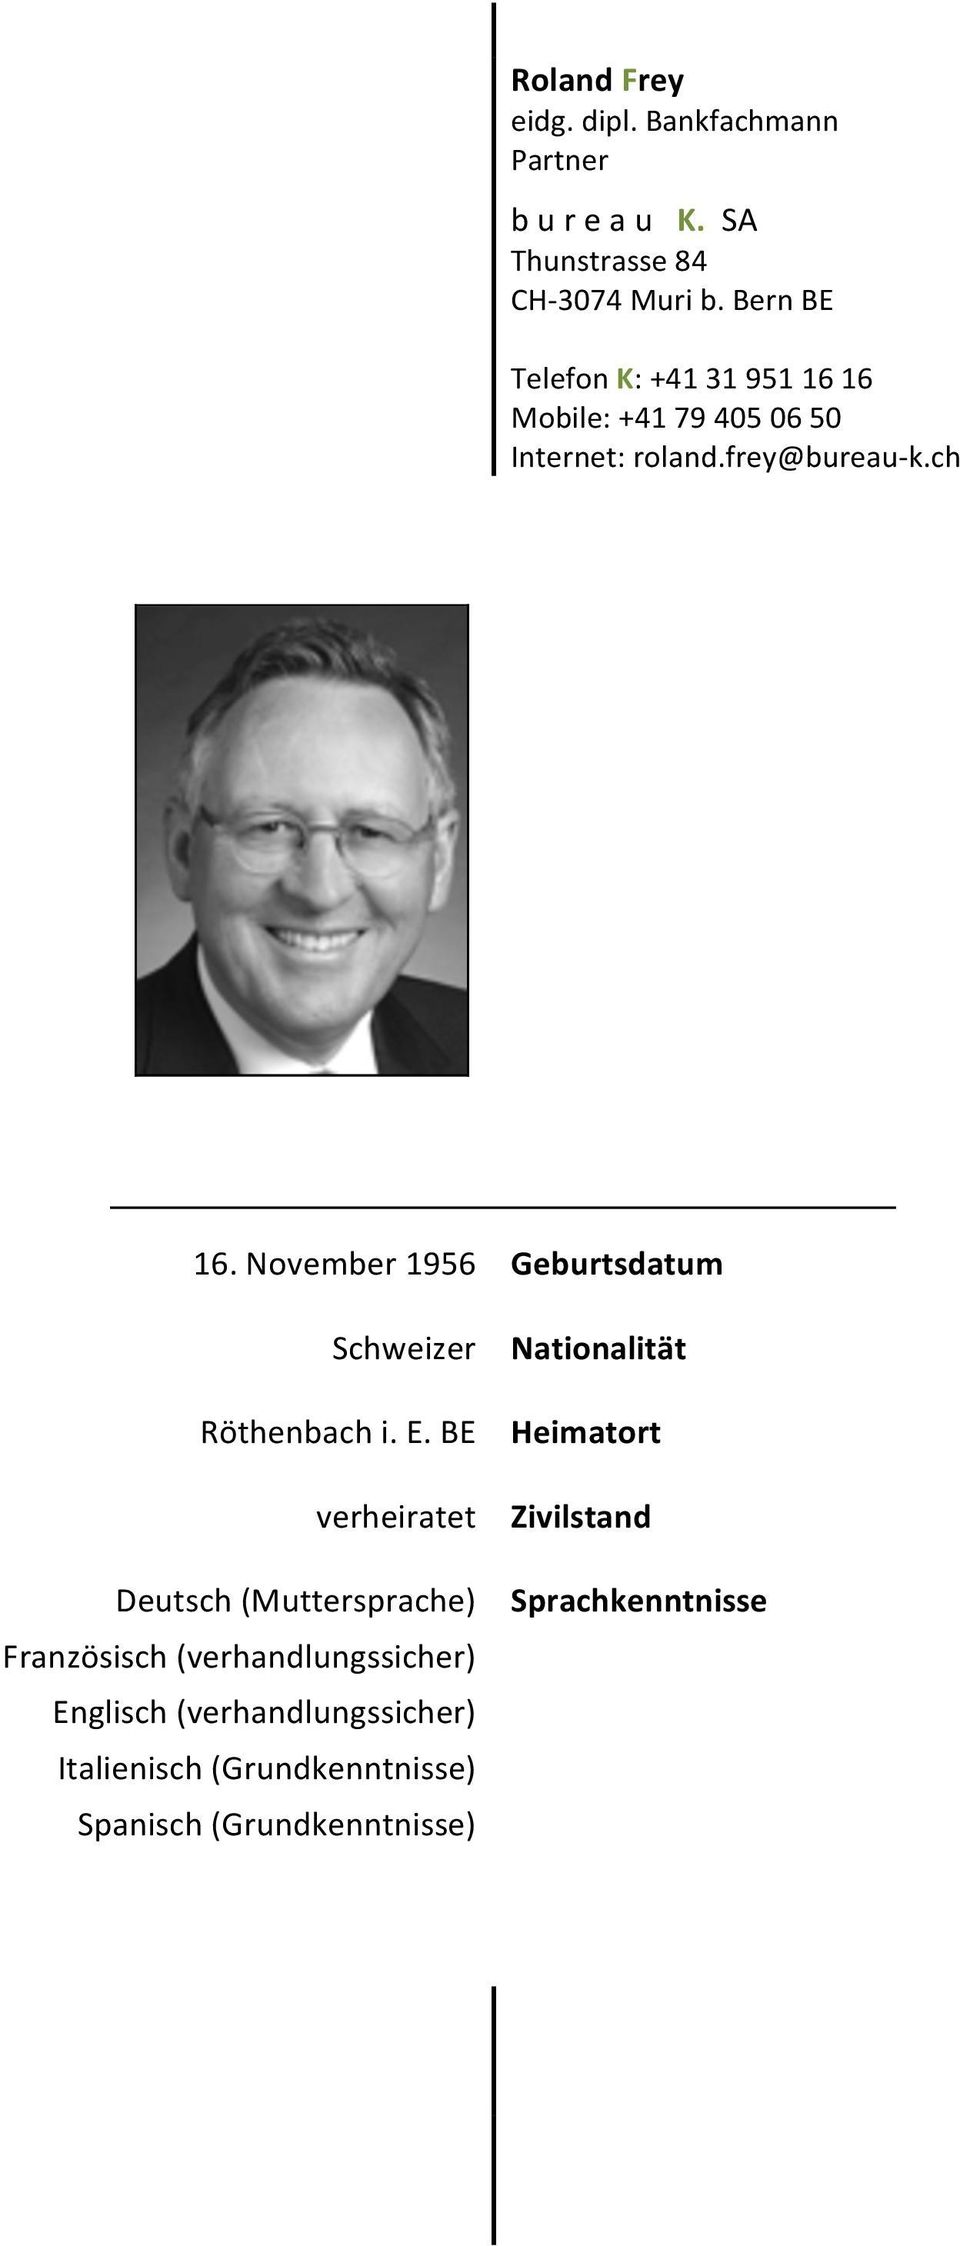 November 1956 Geburtsdatum Schweizer Röthenbach i. E.